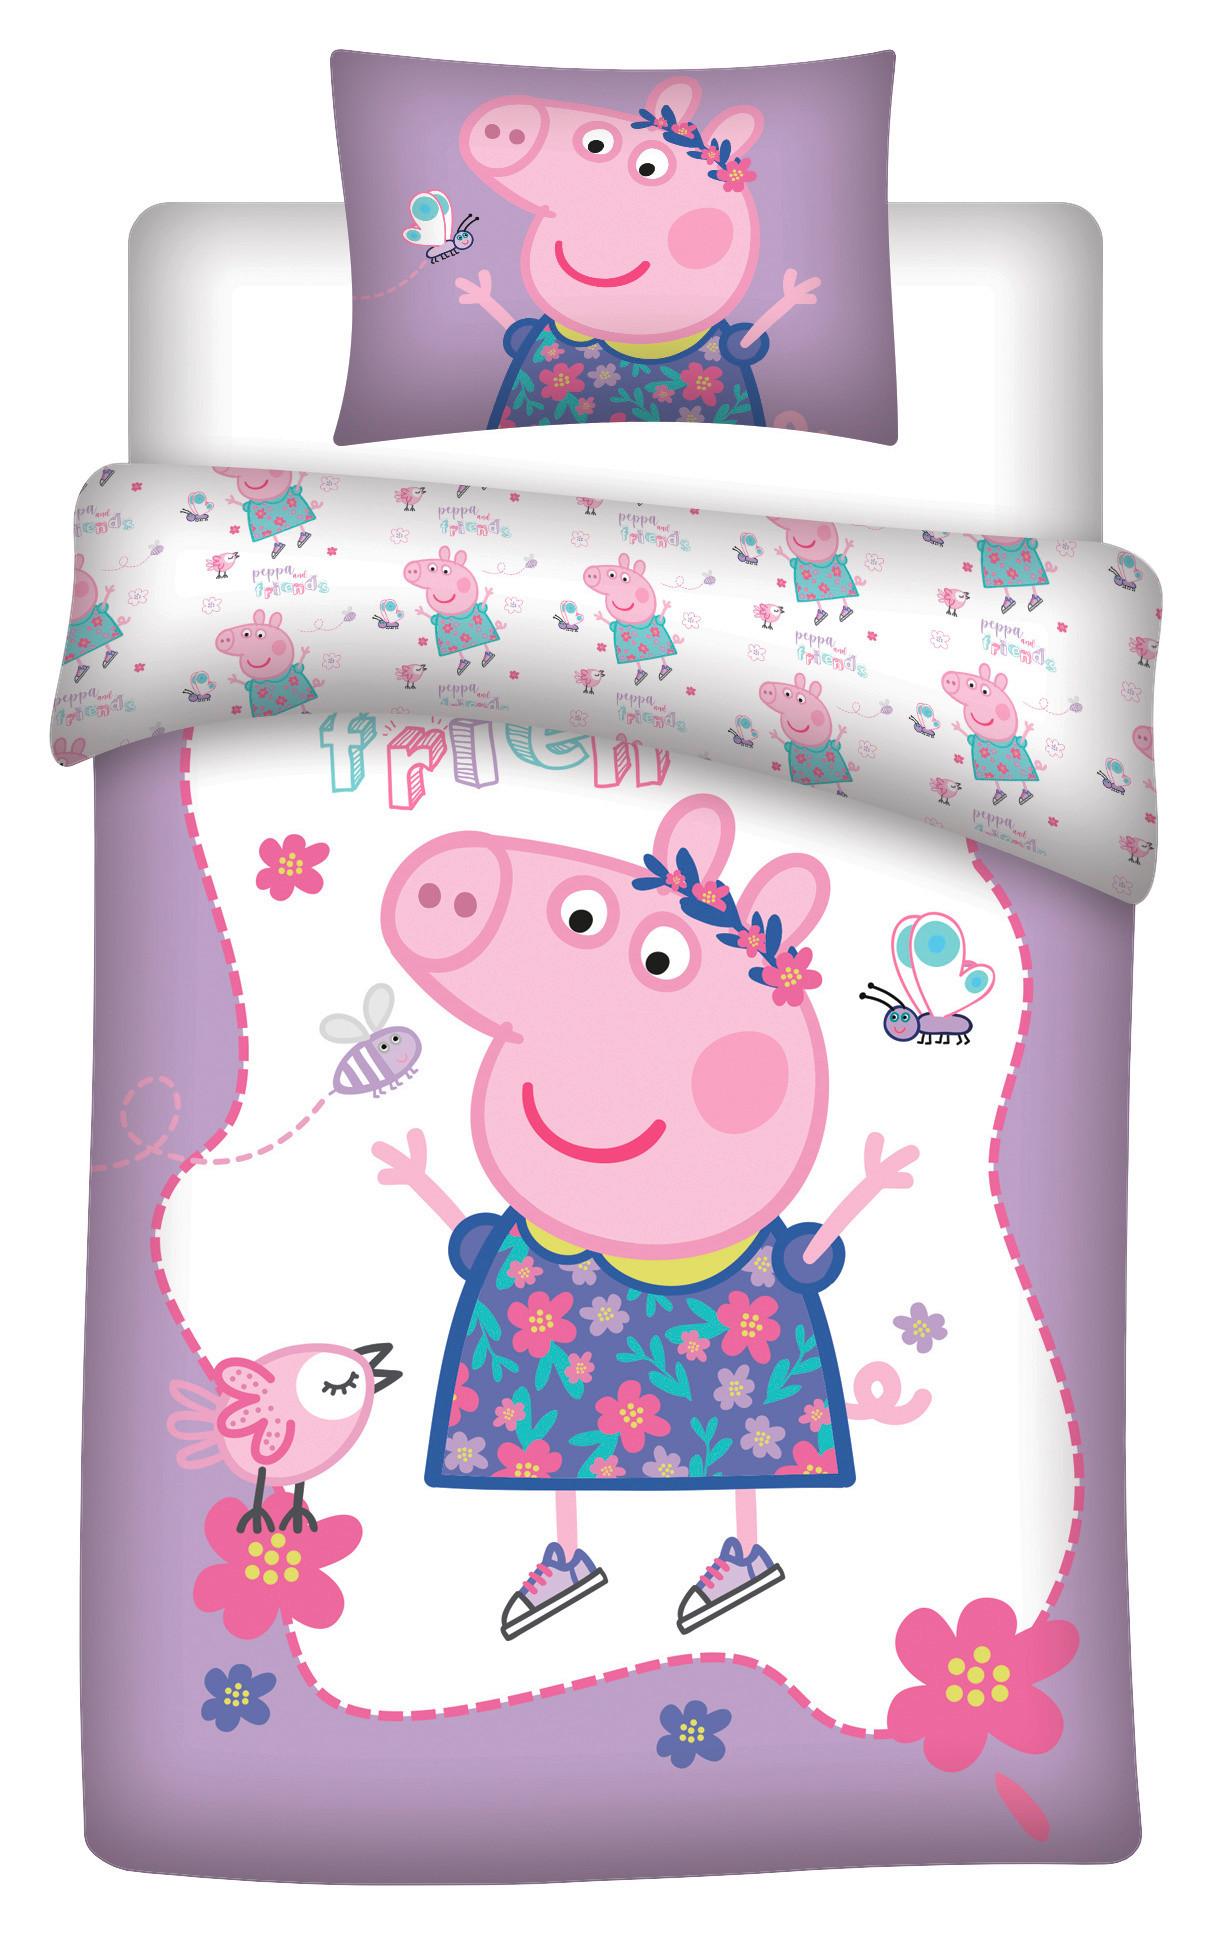 Kinderbettwäsche 140x200 cm Peppa Pig Renforcé Baumwolle - Lila, Textil